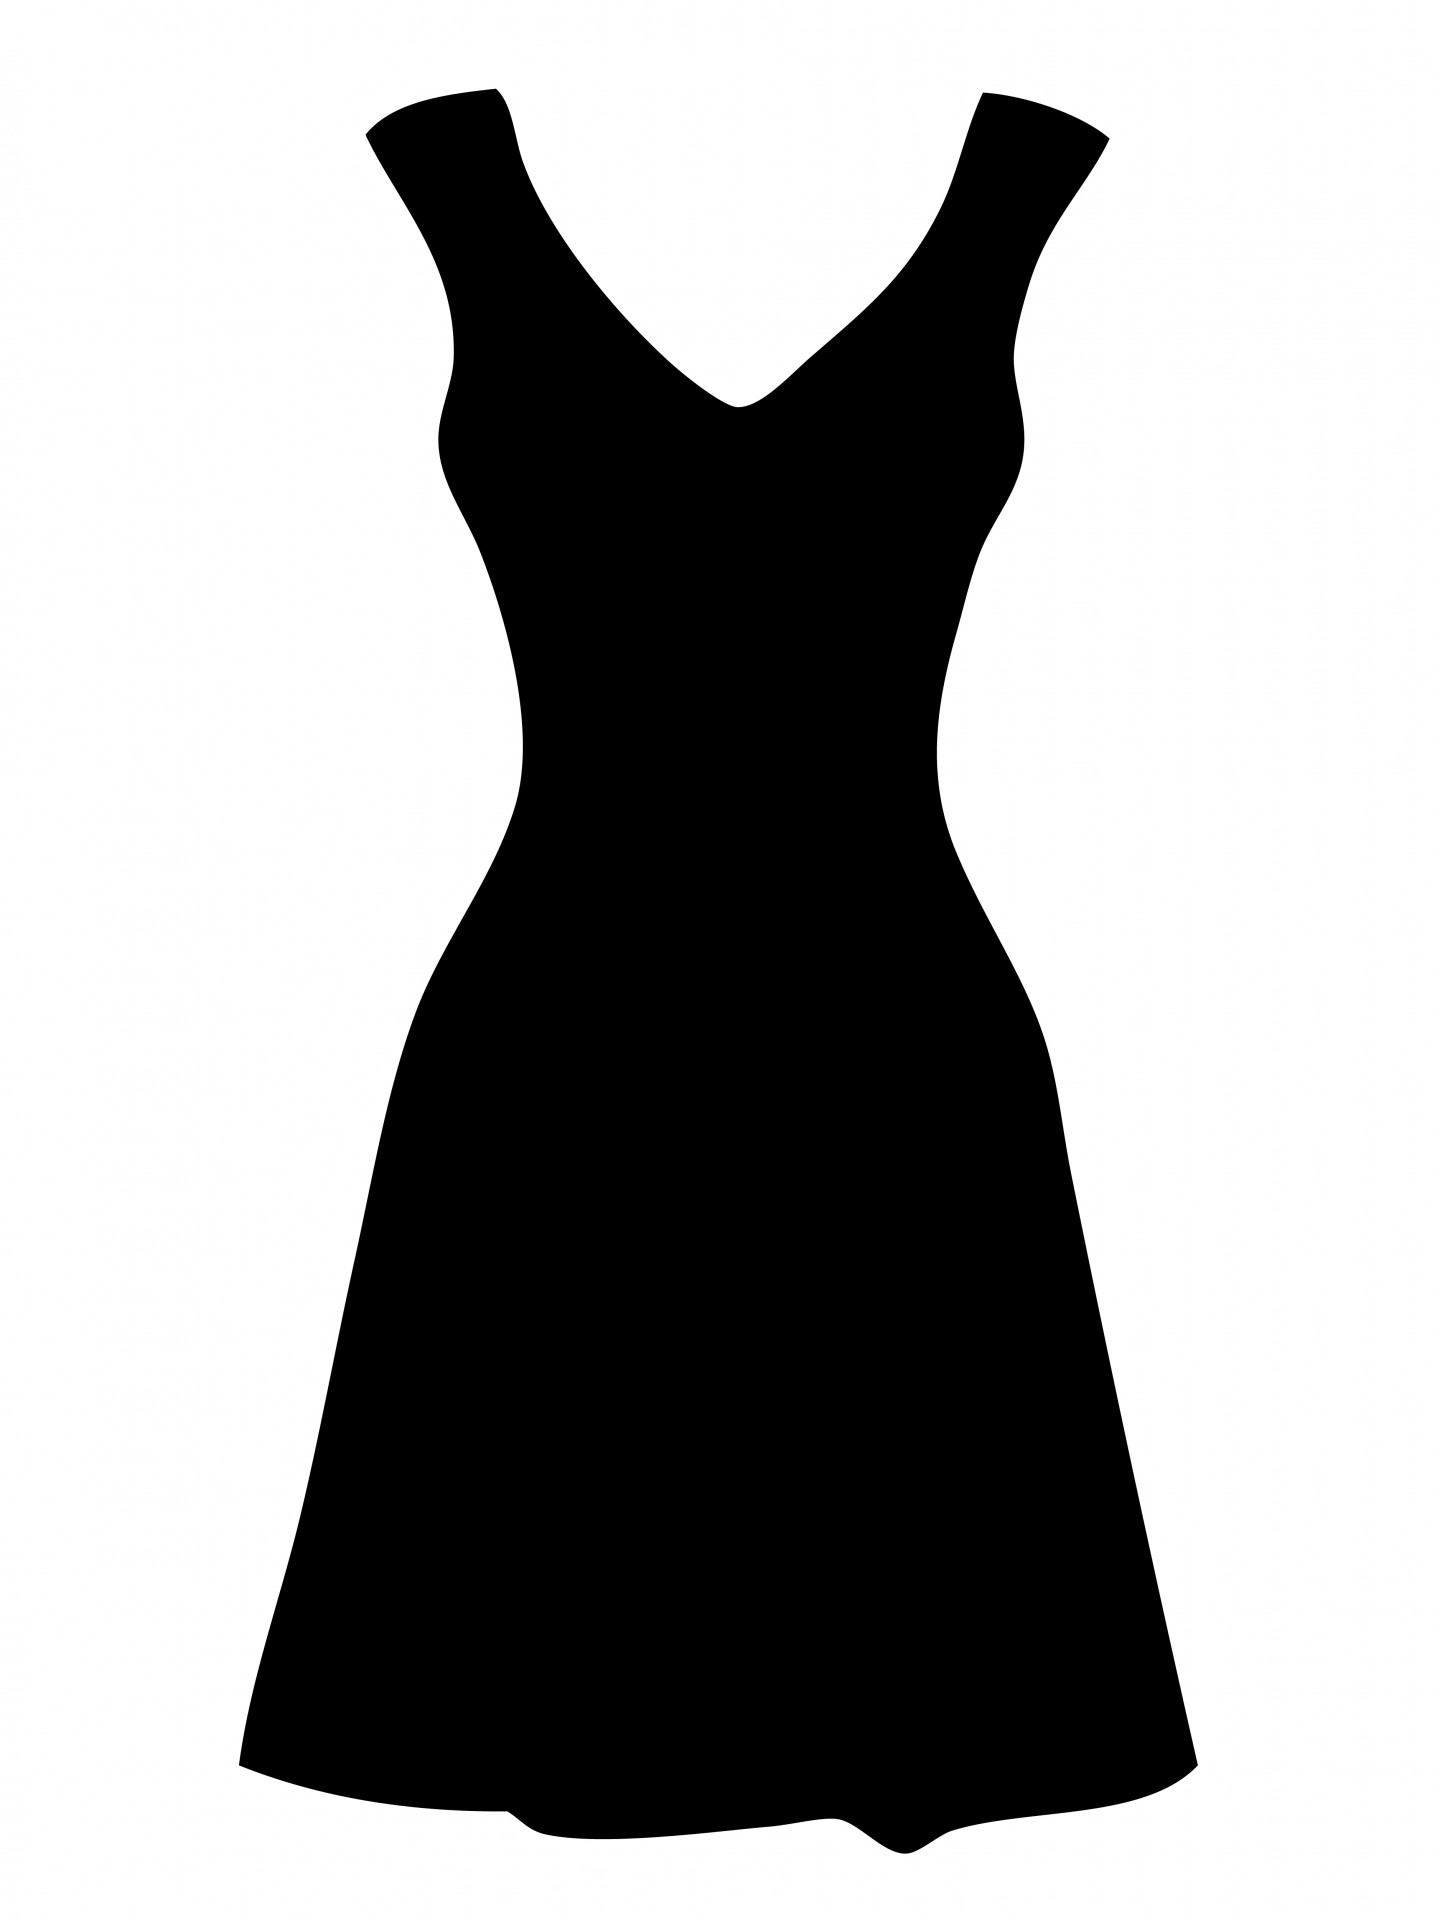 Silhouette Dress